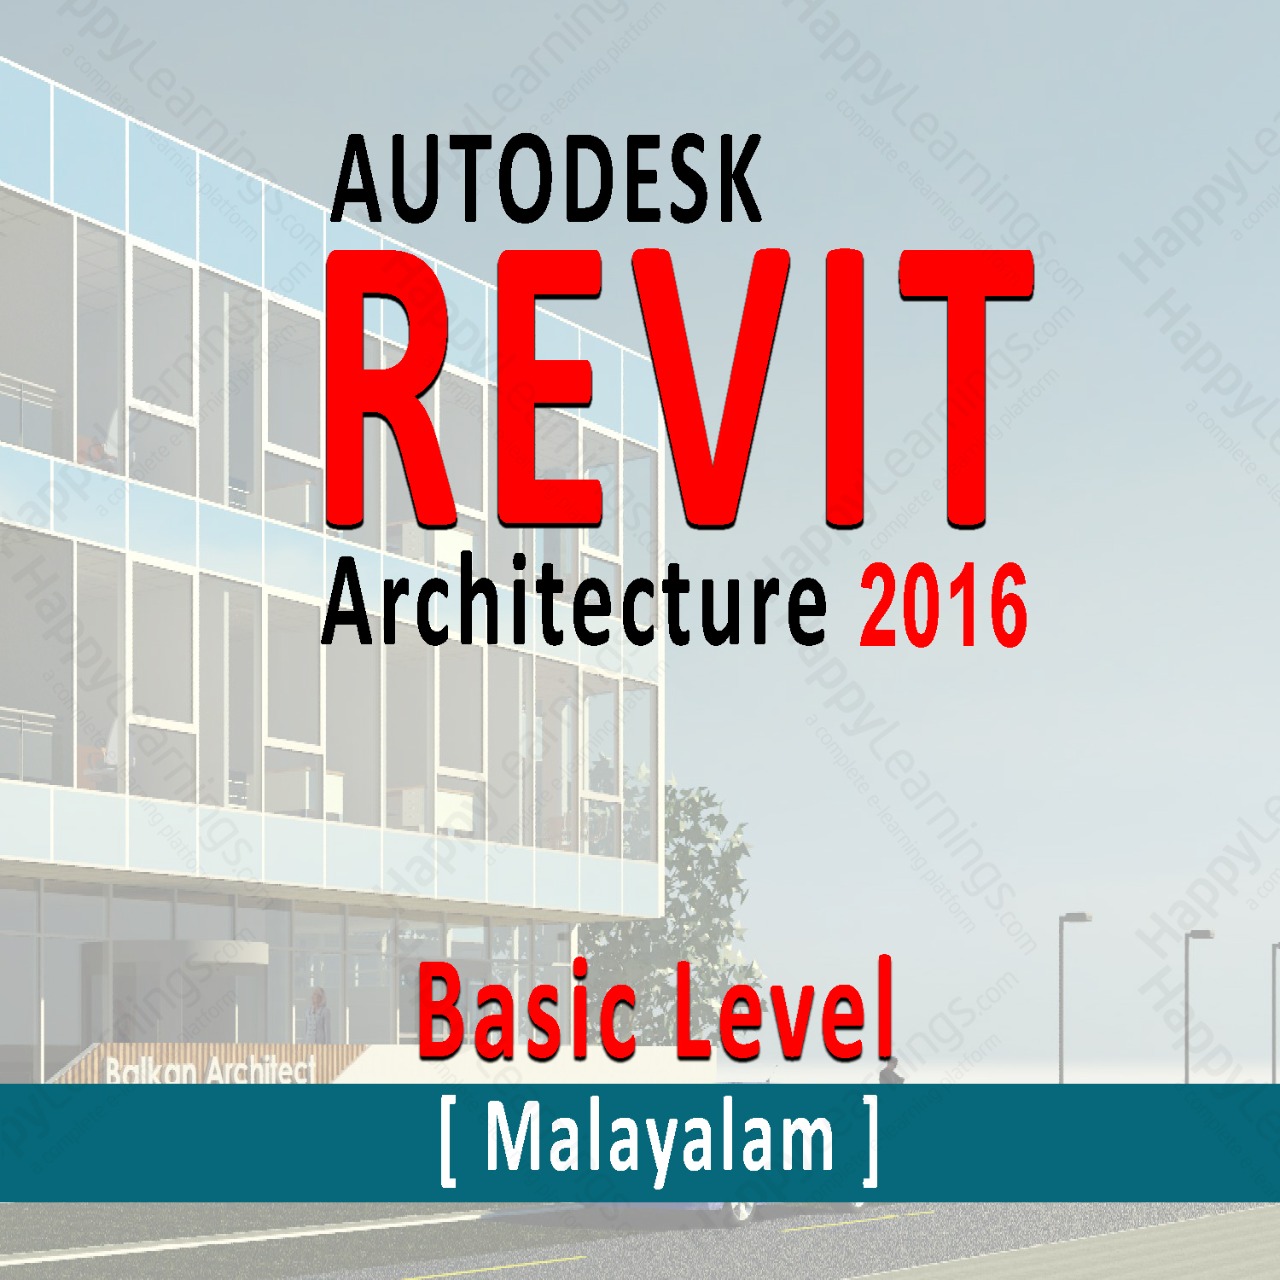 Autodesk Revit (Architecture) Training- For Beginners